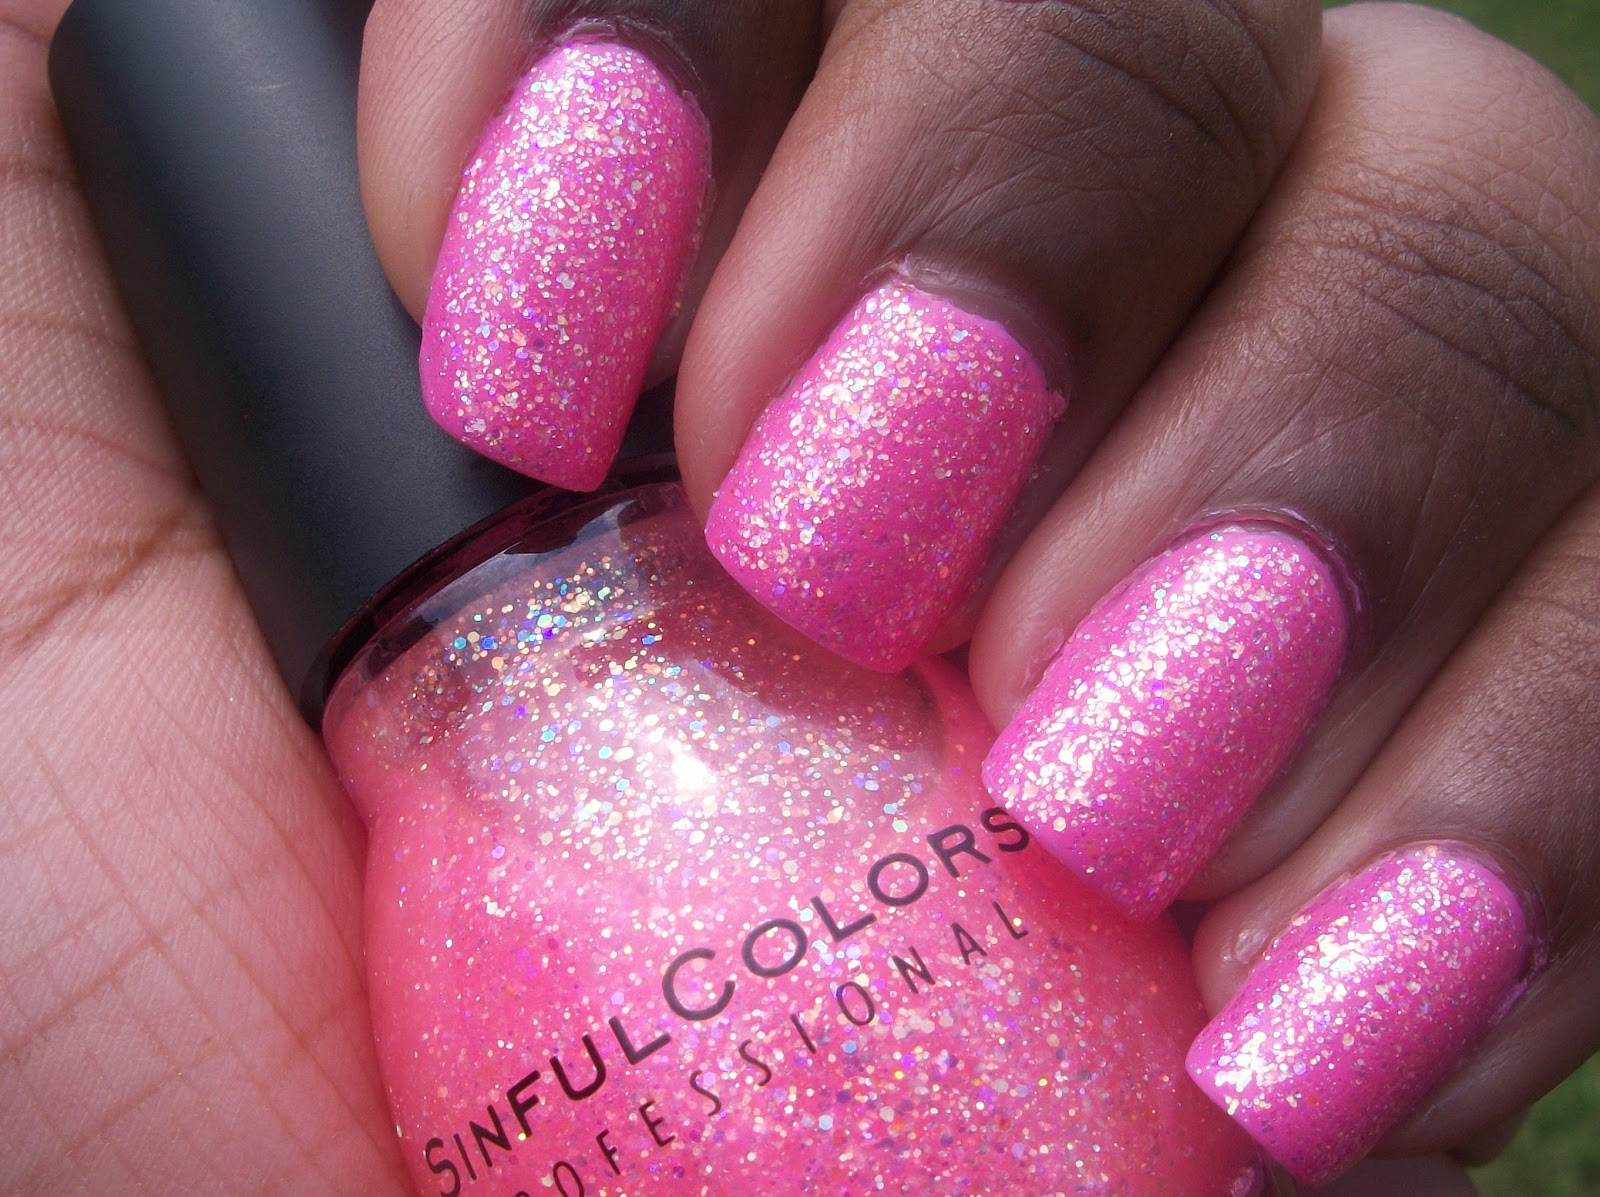 Sinful Colors Professional Nail Polish, Pinky Glitter - wide 6